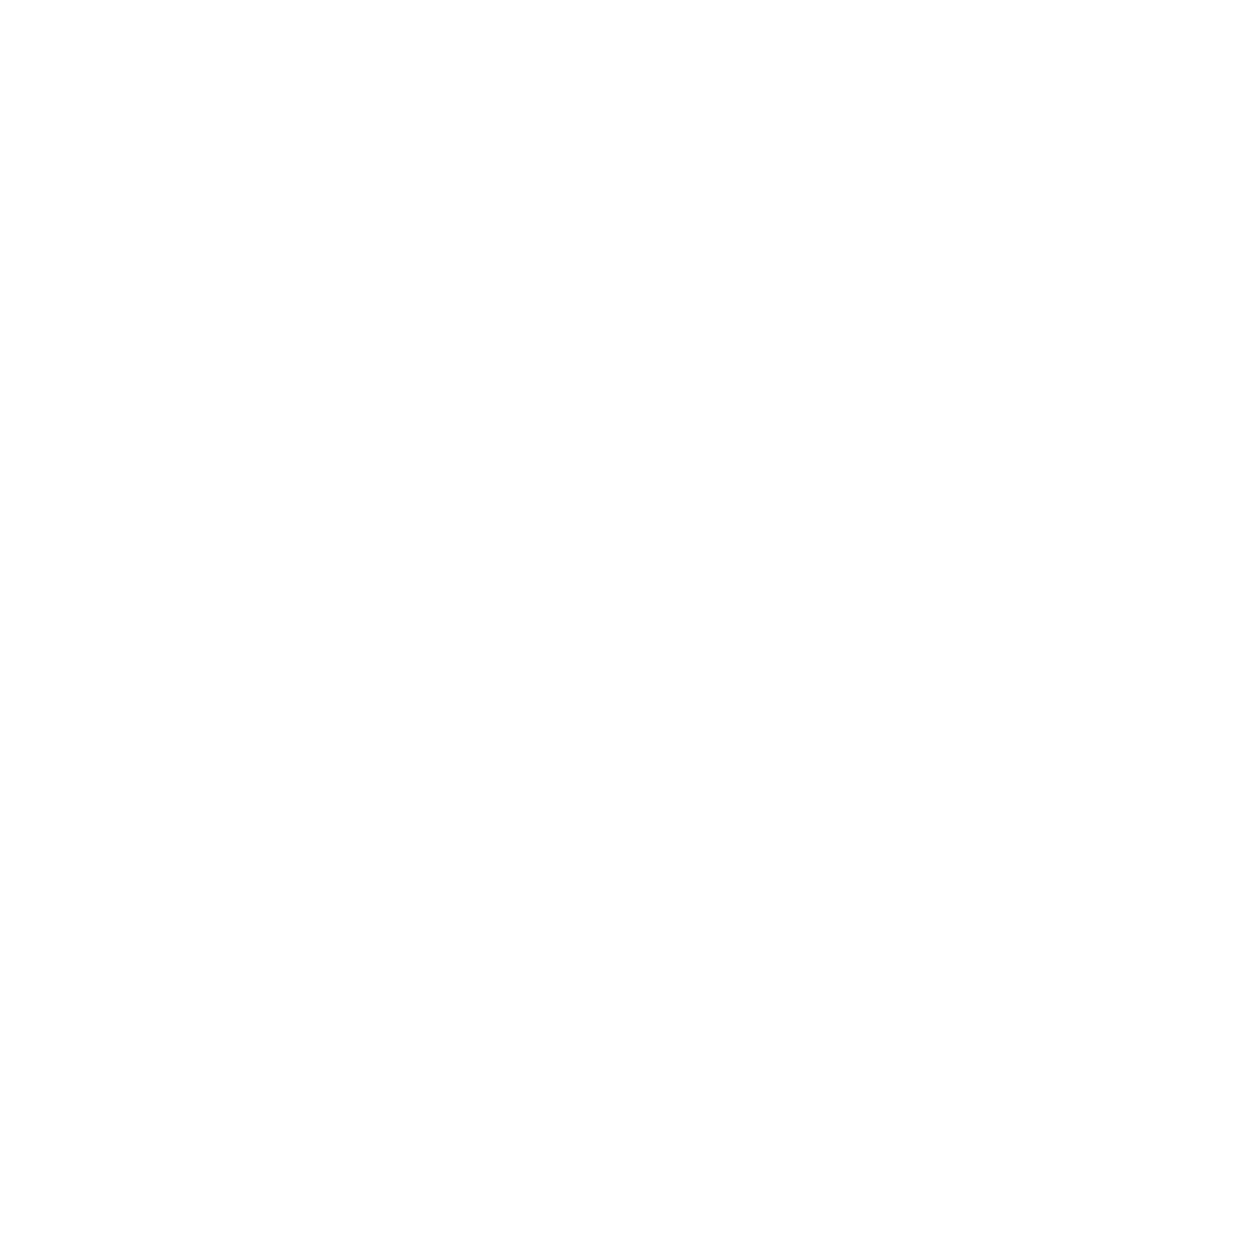 Steeldeal - unikalūs metalo baldai ir interjero detalės